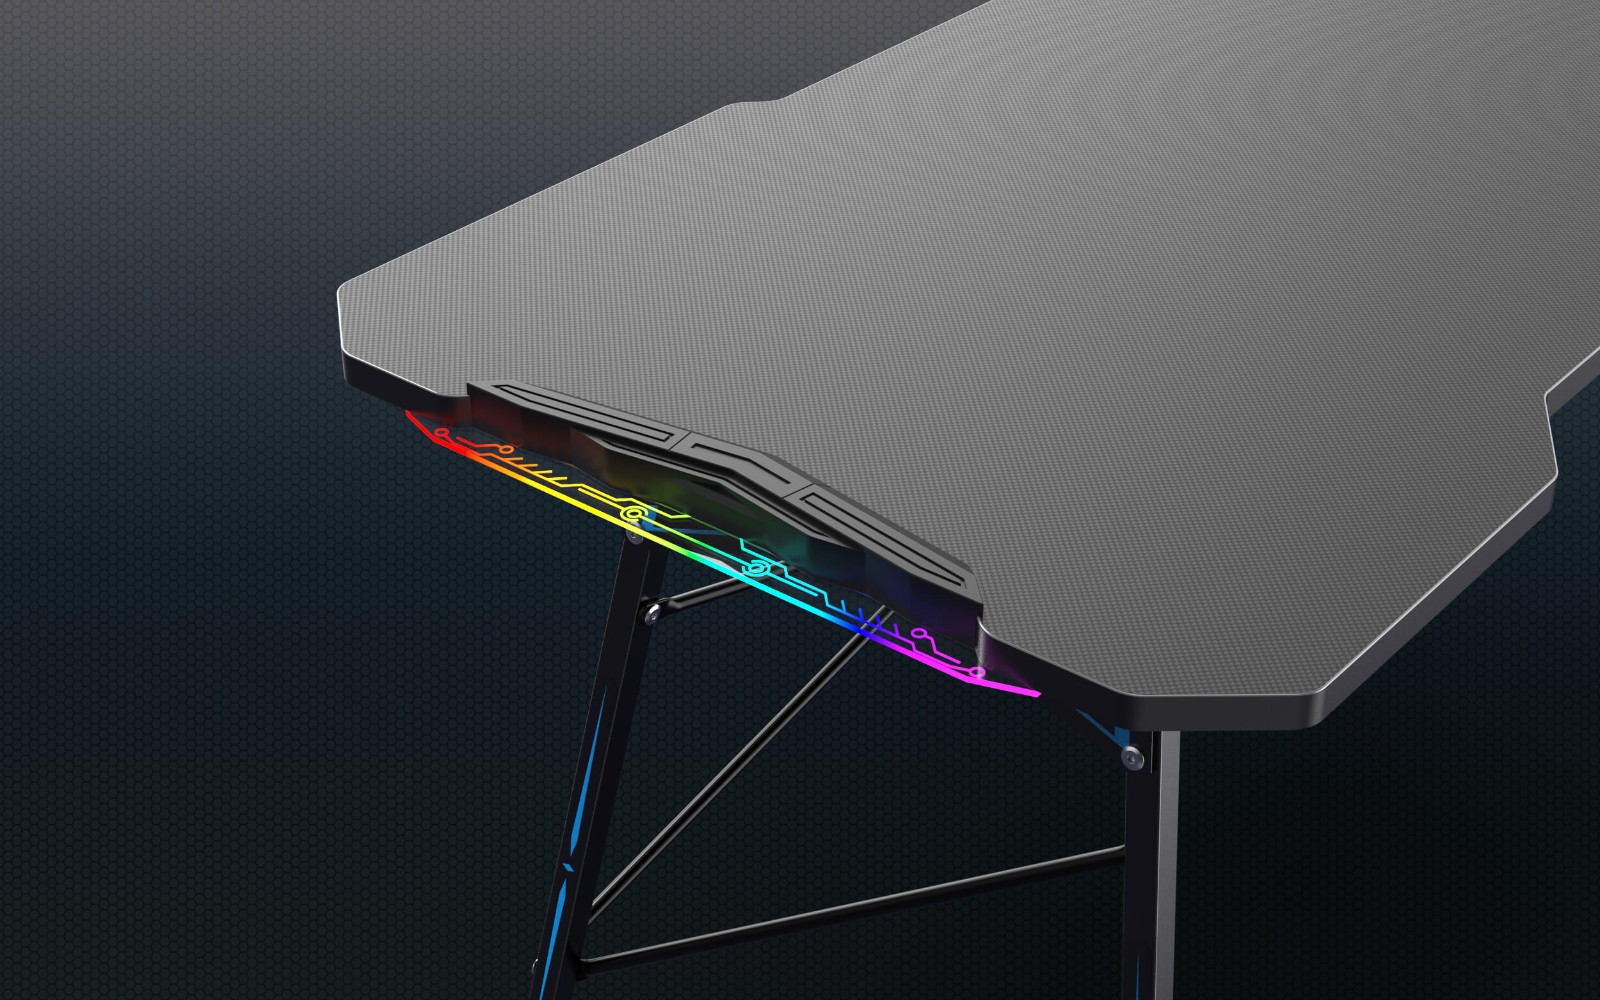 Gaming desk with Acrylic lighting